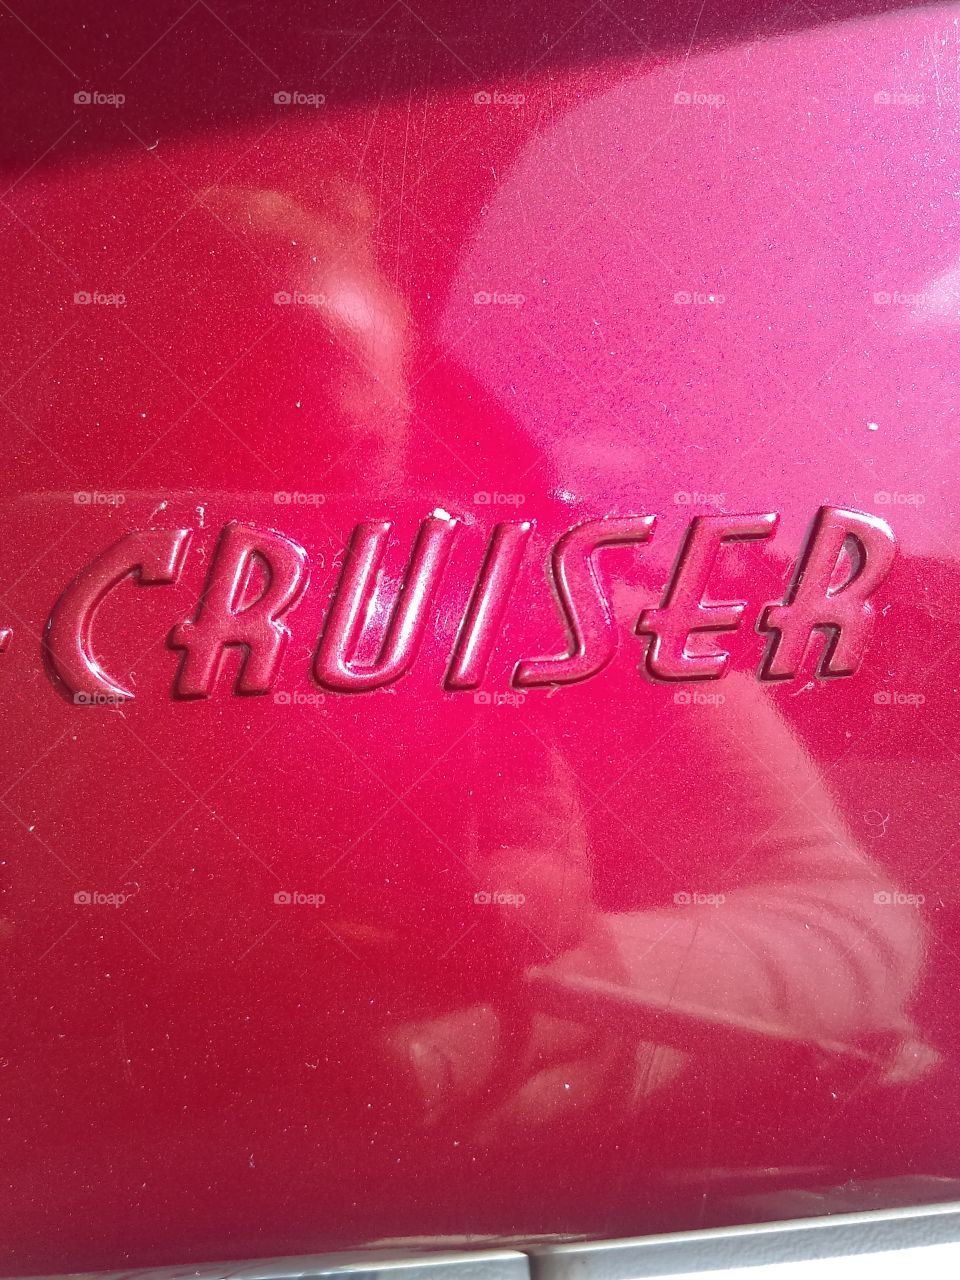 cruiser